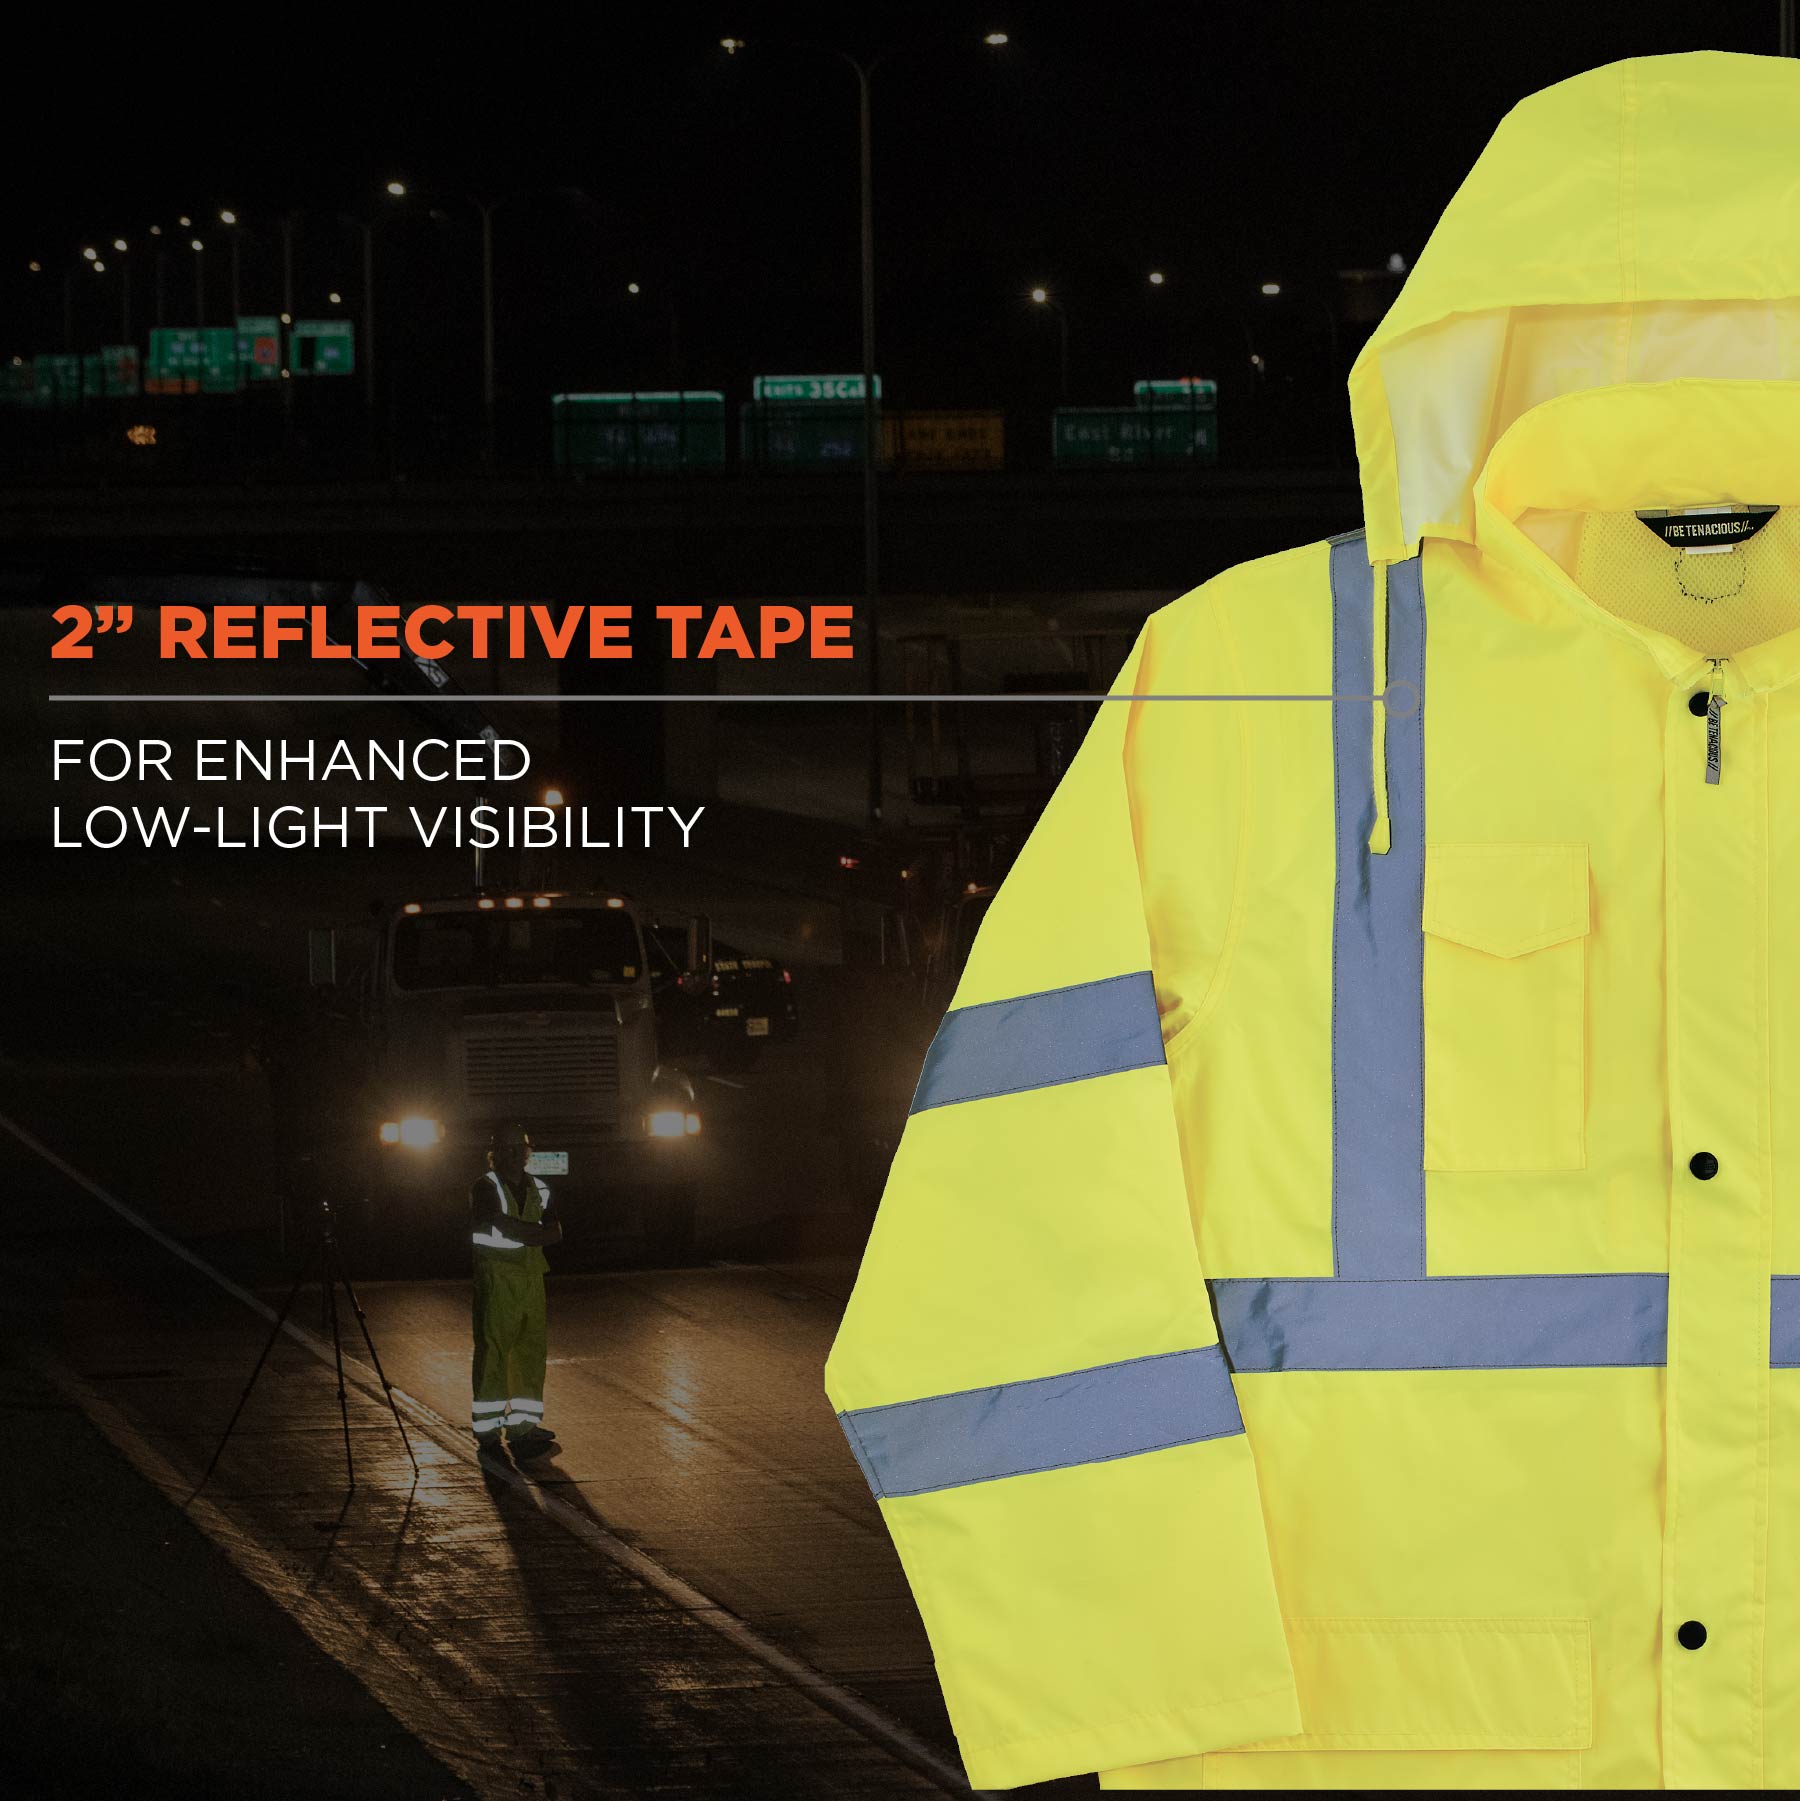 Ironwear 9511 Hi-Visibility Reflective Rain Jacket with Tuck away Hood Badge and Radio Clip Small